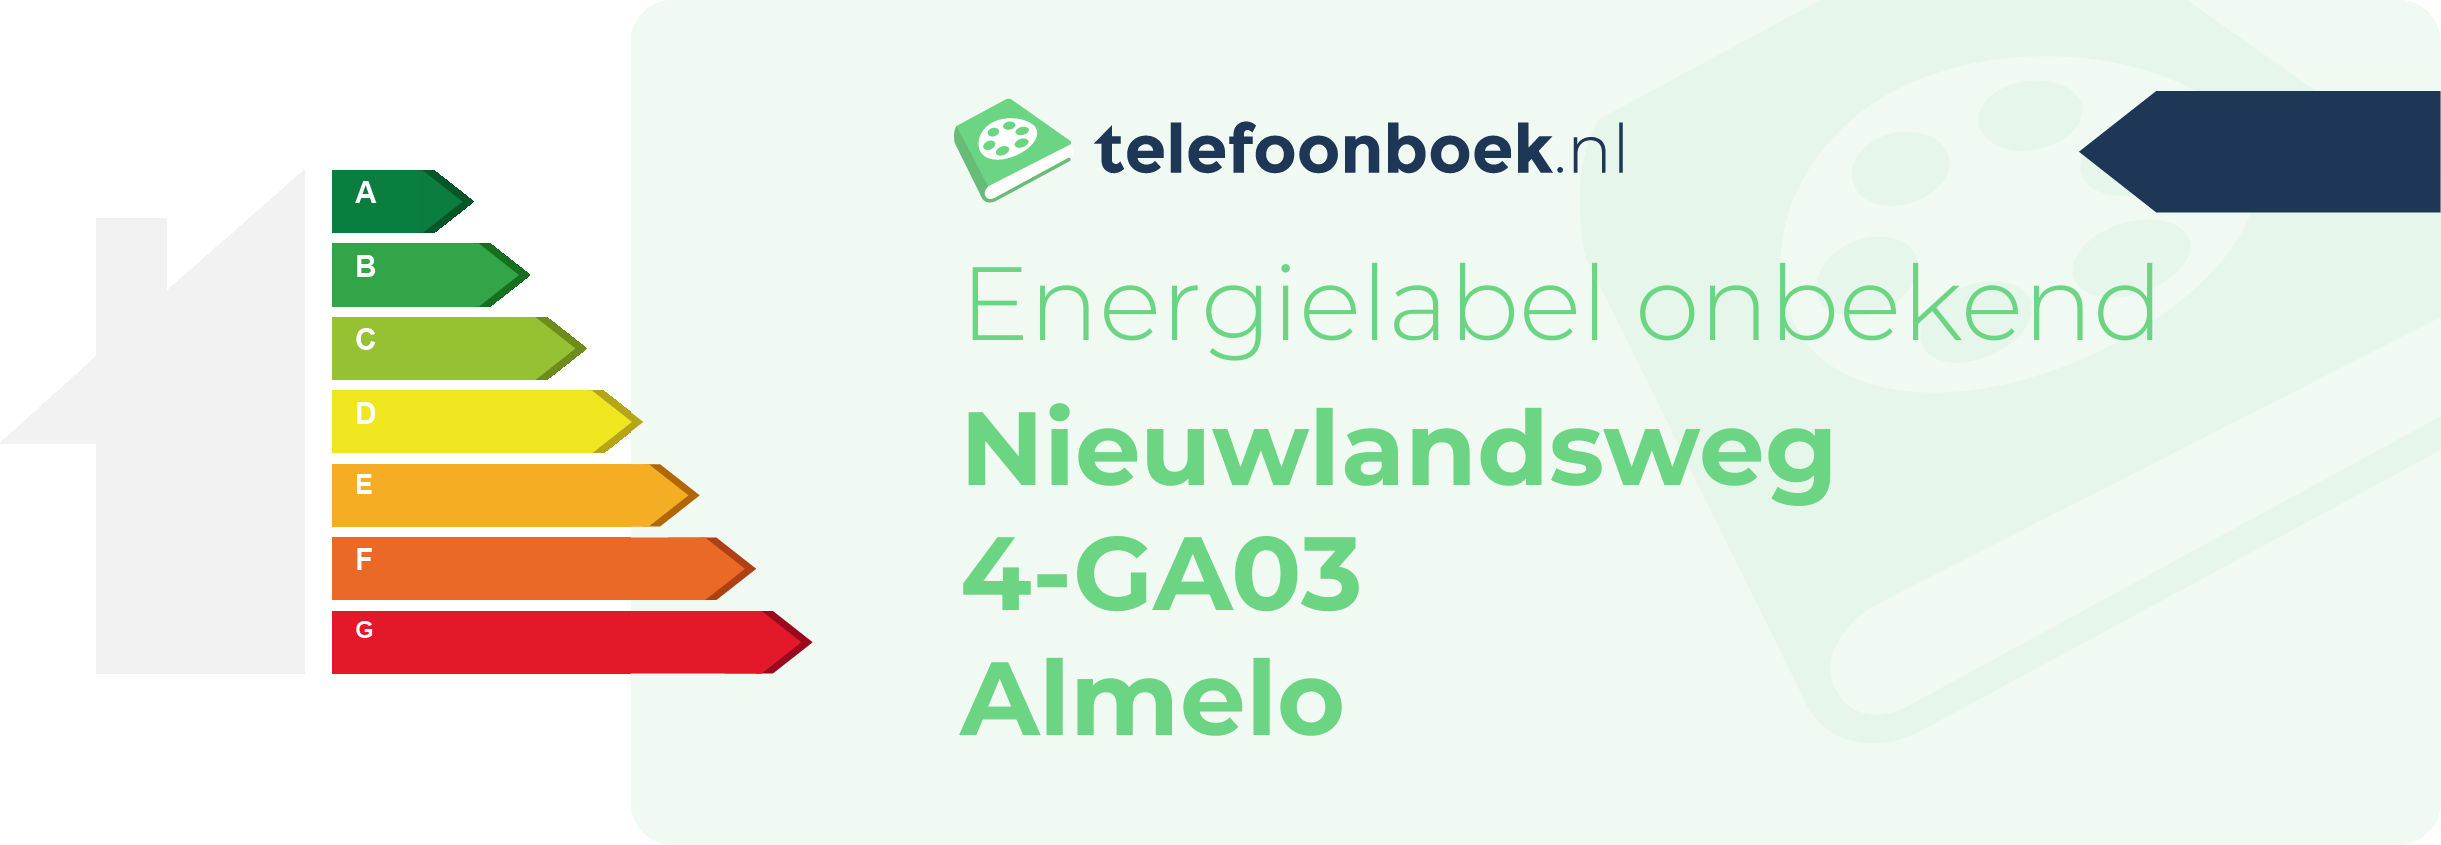 Energielabel Nieuwlandsweg 4-GA03 Almelo